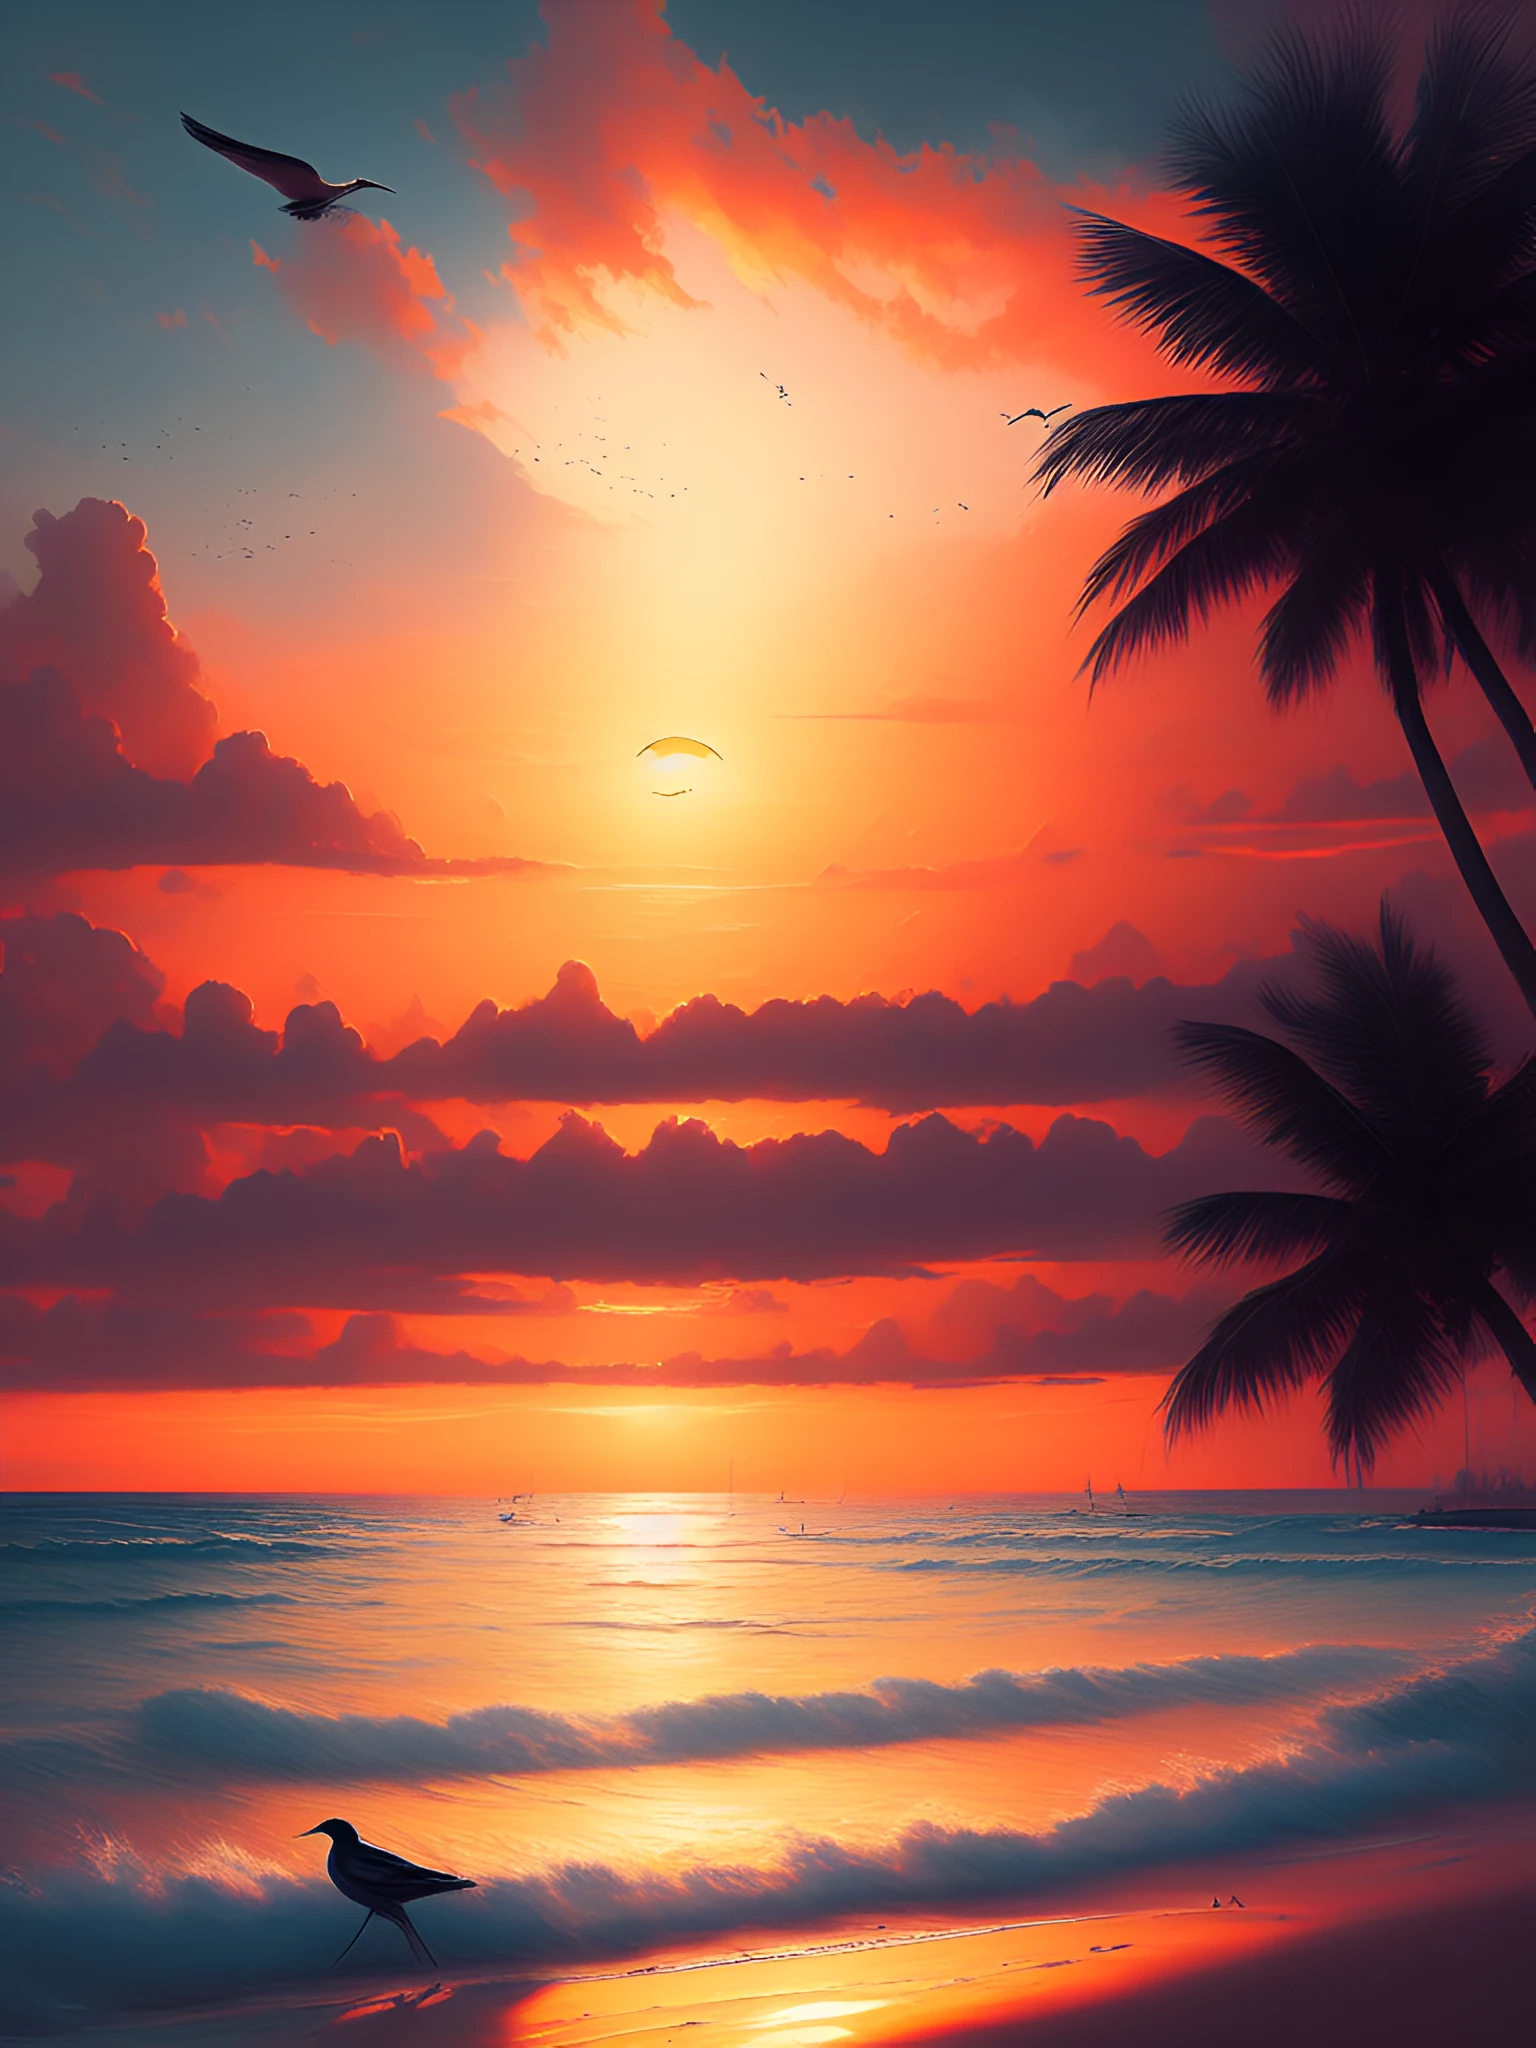 dreamlikeart a painting of a beautiful paradise sunset beach, sun in the middle, far away bird flying on the horizon, trending on artstation in the style of Greg Rutkowski